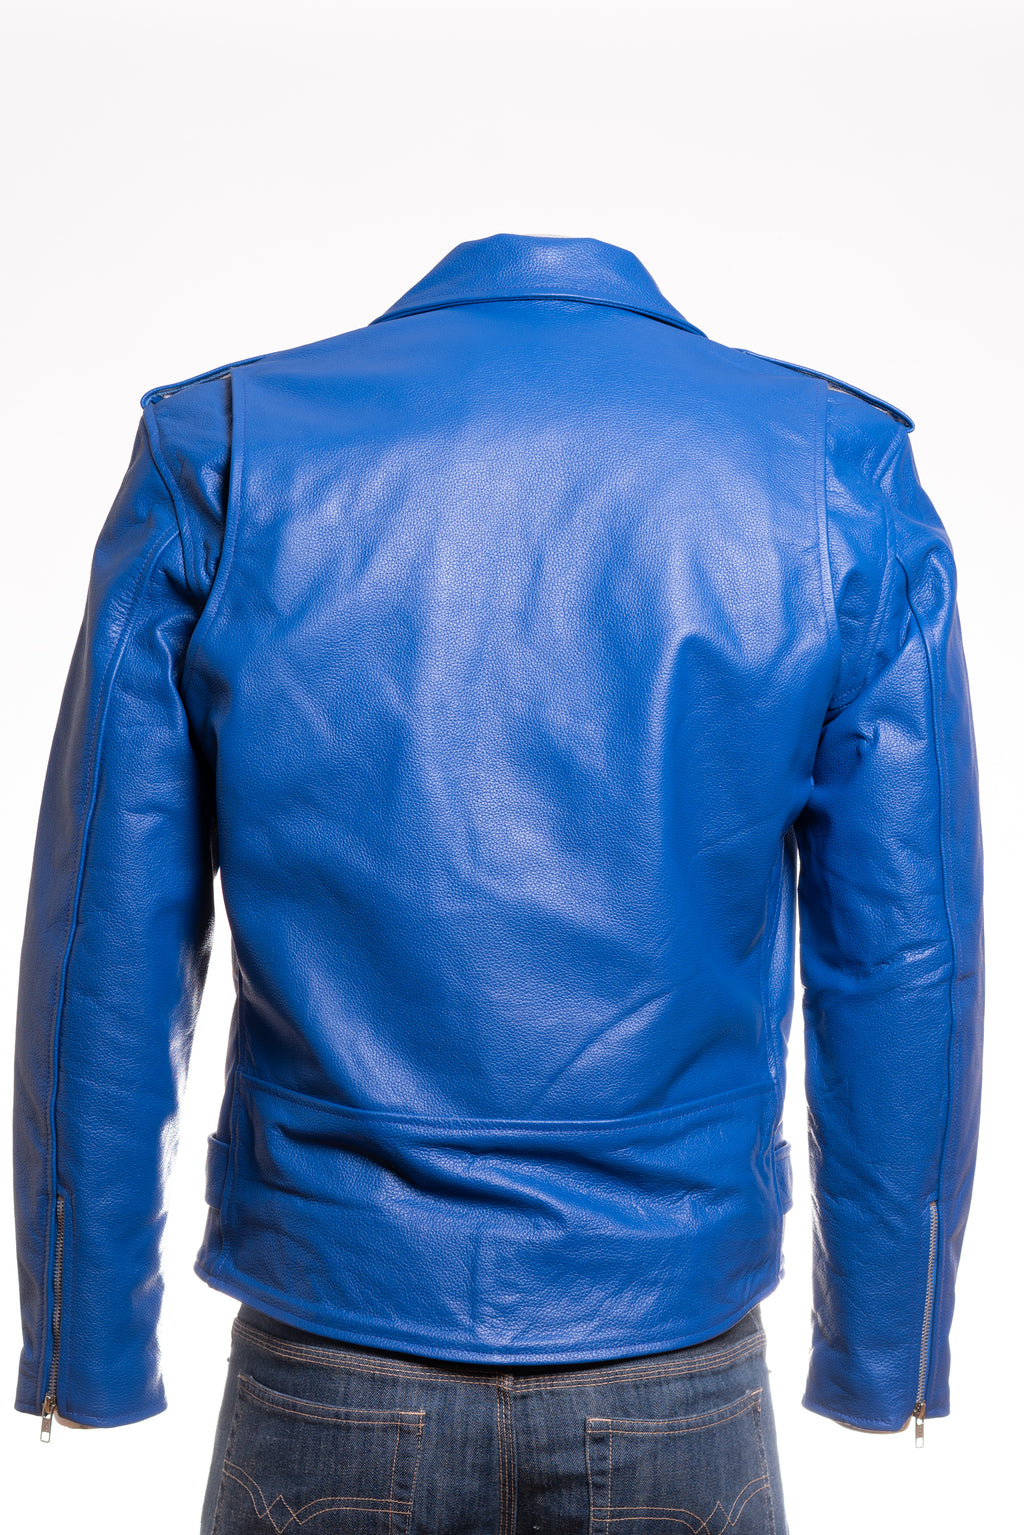 Men's Royal Blue Classic Brando Biker Style Cow Hide Leather Jacket: Jose